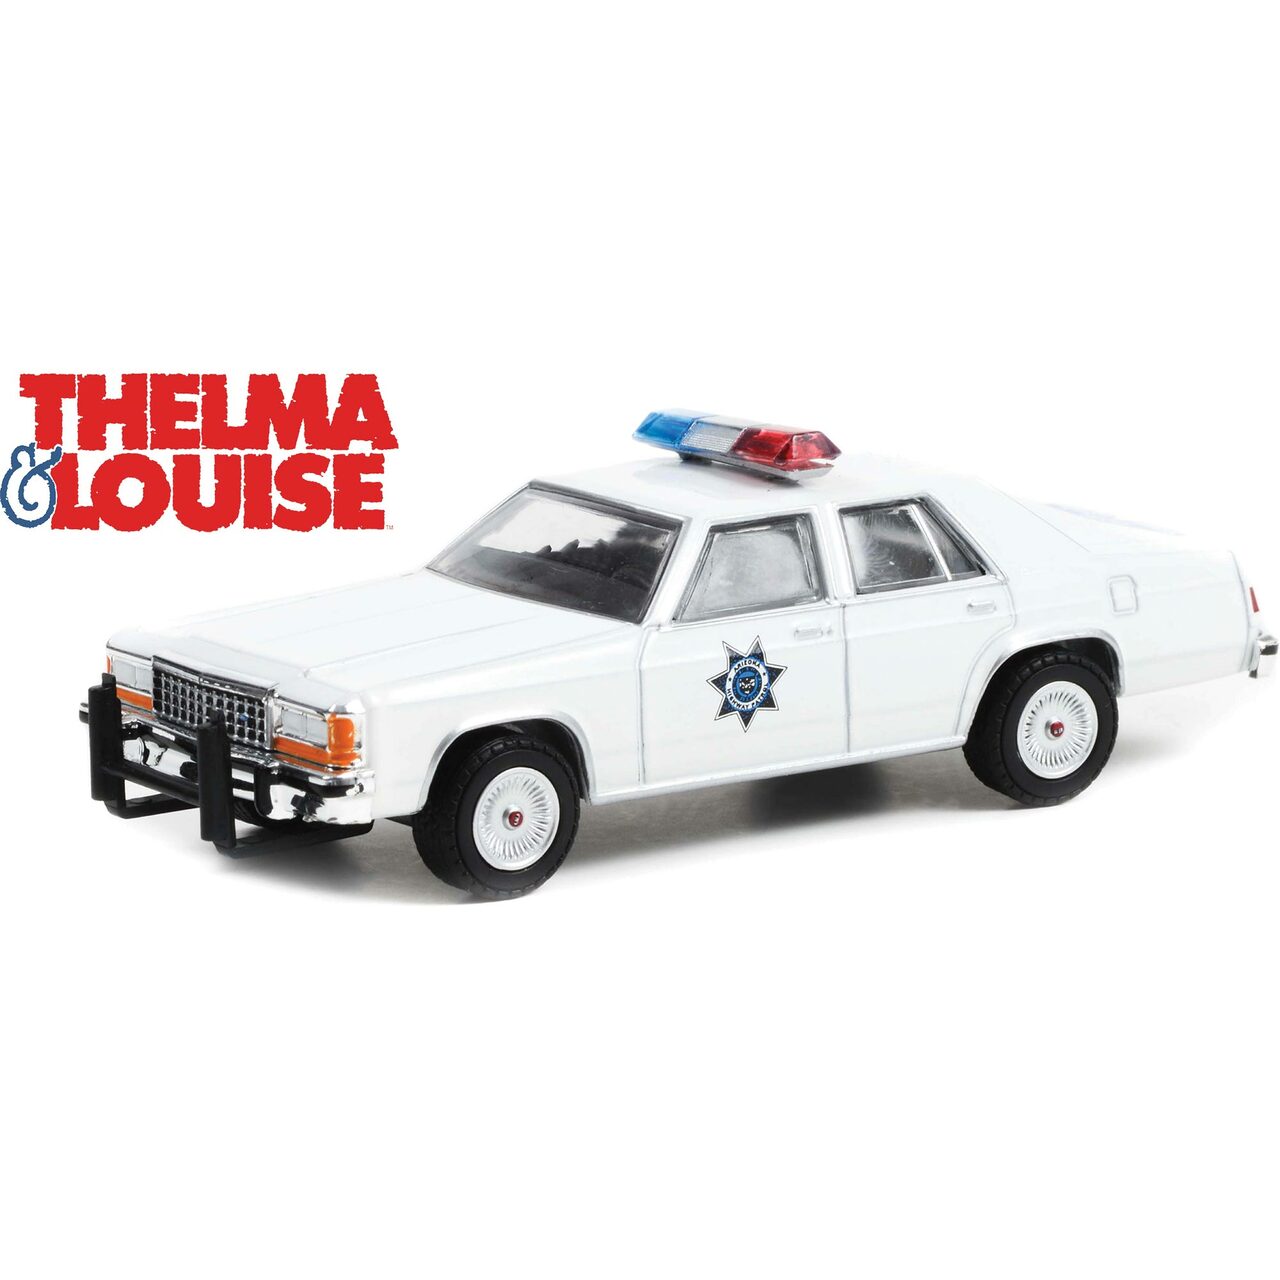 1983 Ford LTD Crown Victoria - Arizona Highway Patrol - Thelma & Louise 1:64 Scale Diecast Replica Model